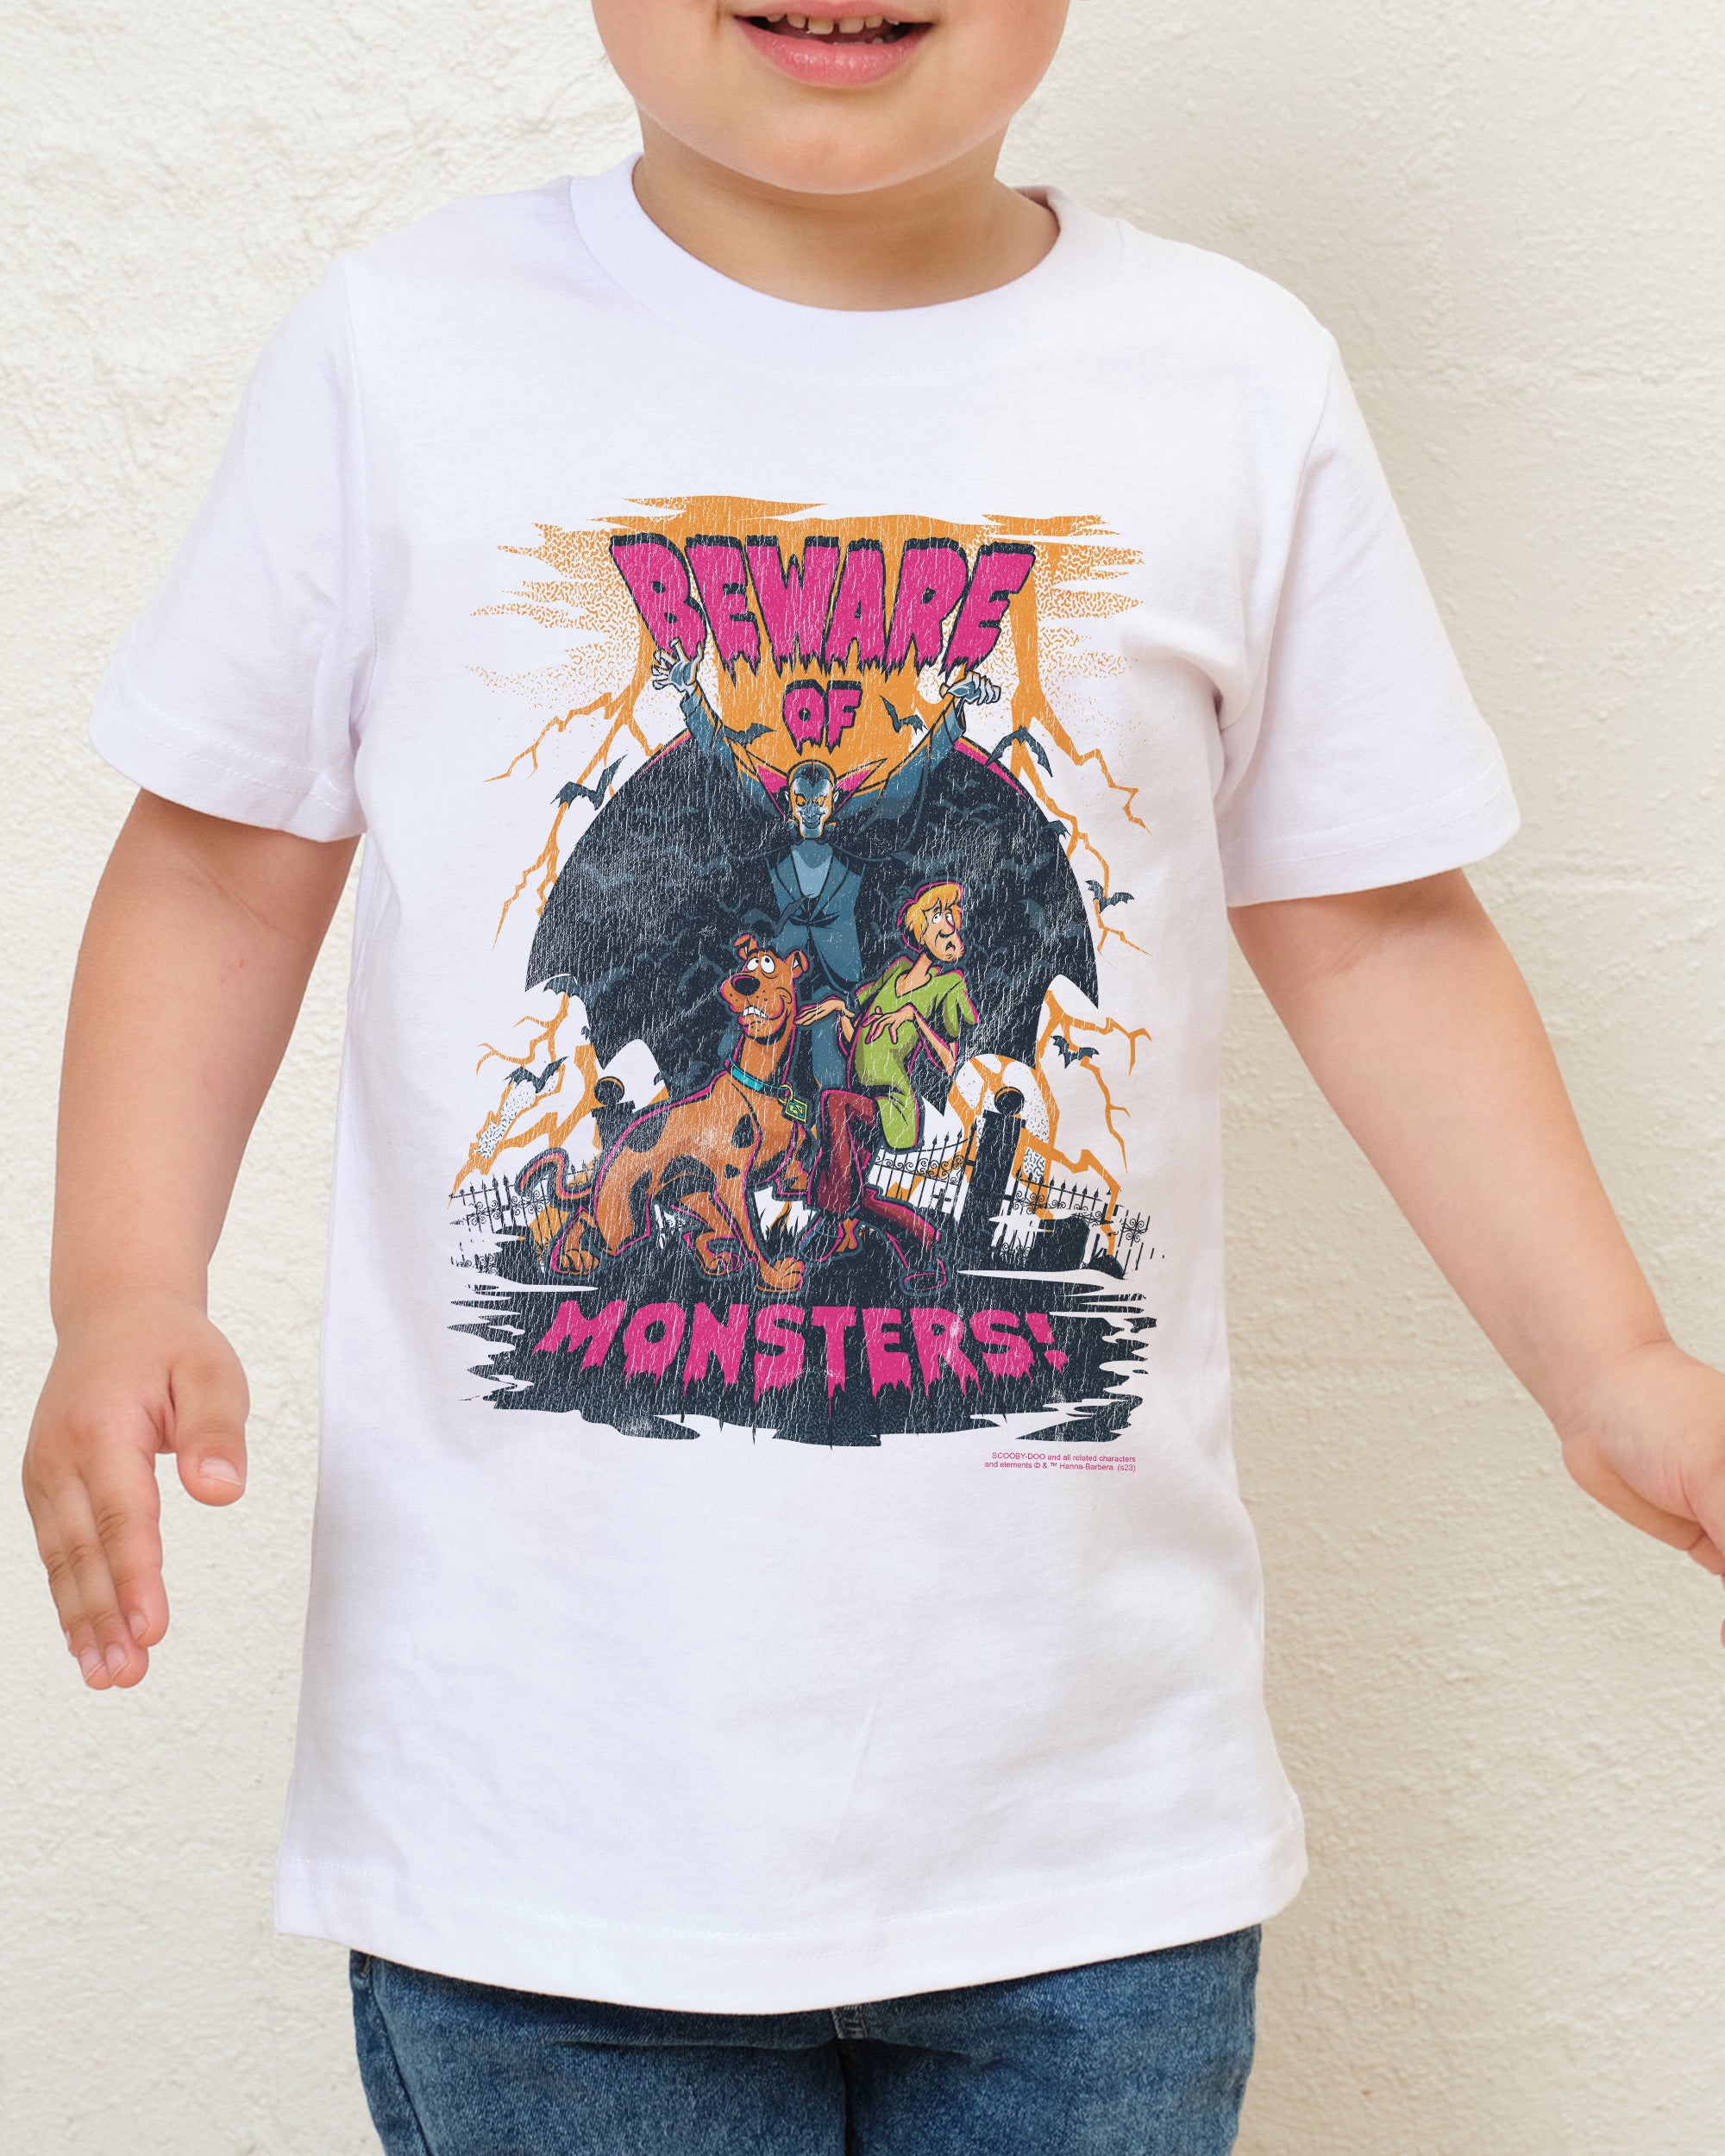 Beware of Monsters Kids T-Shirt